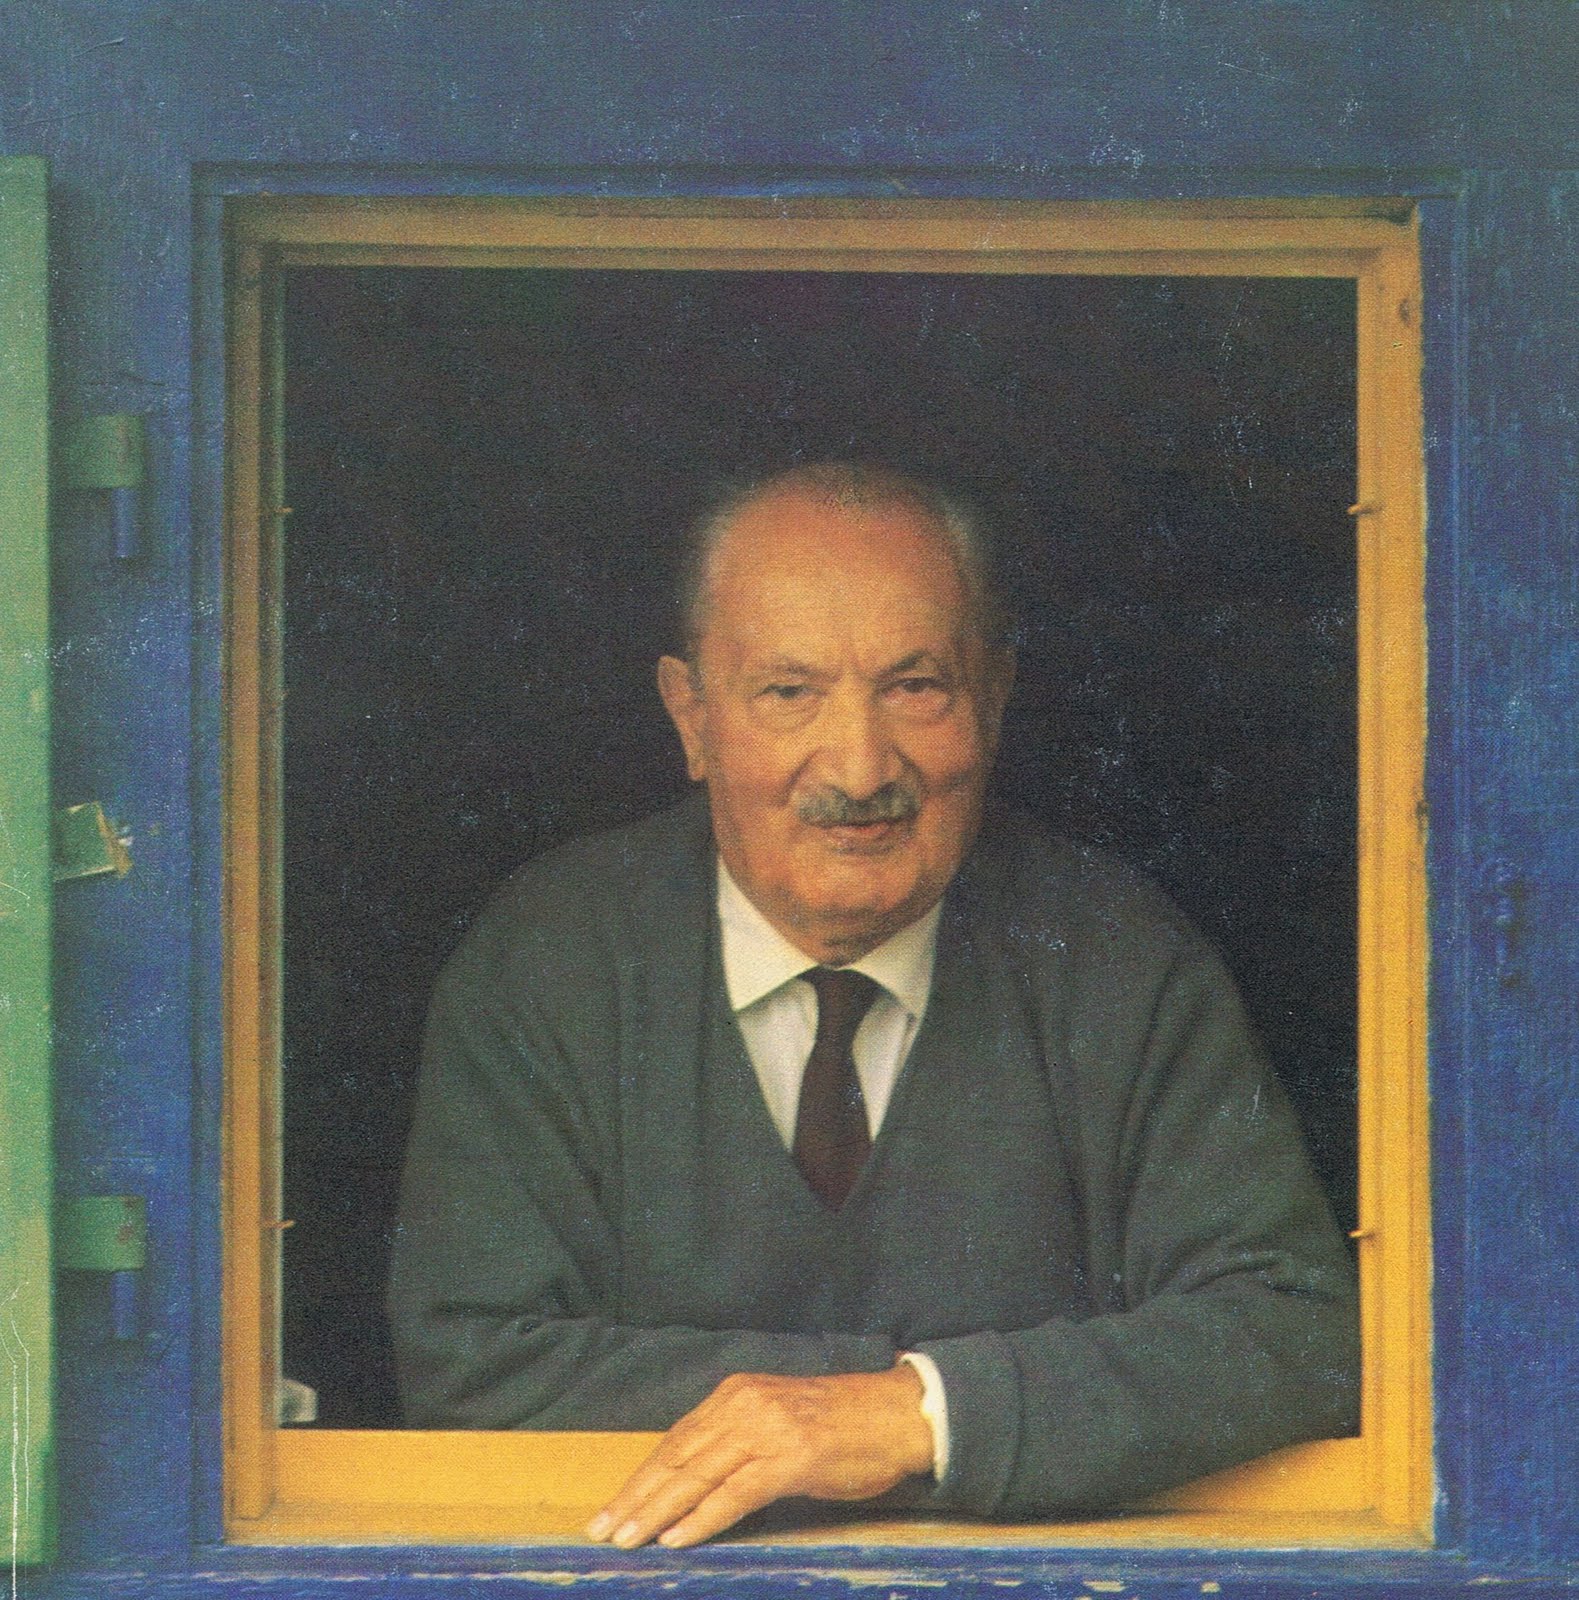 A picture of Heidegger.